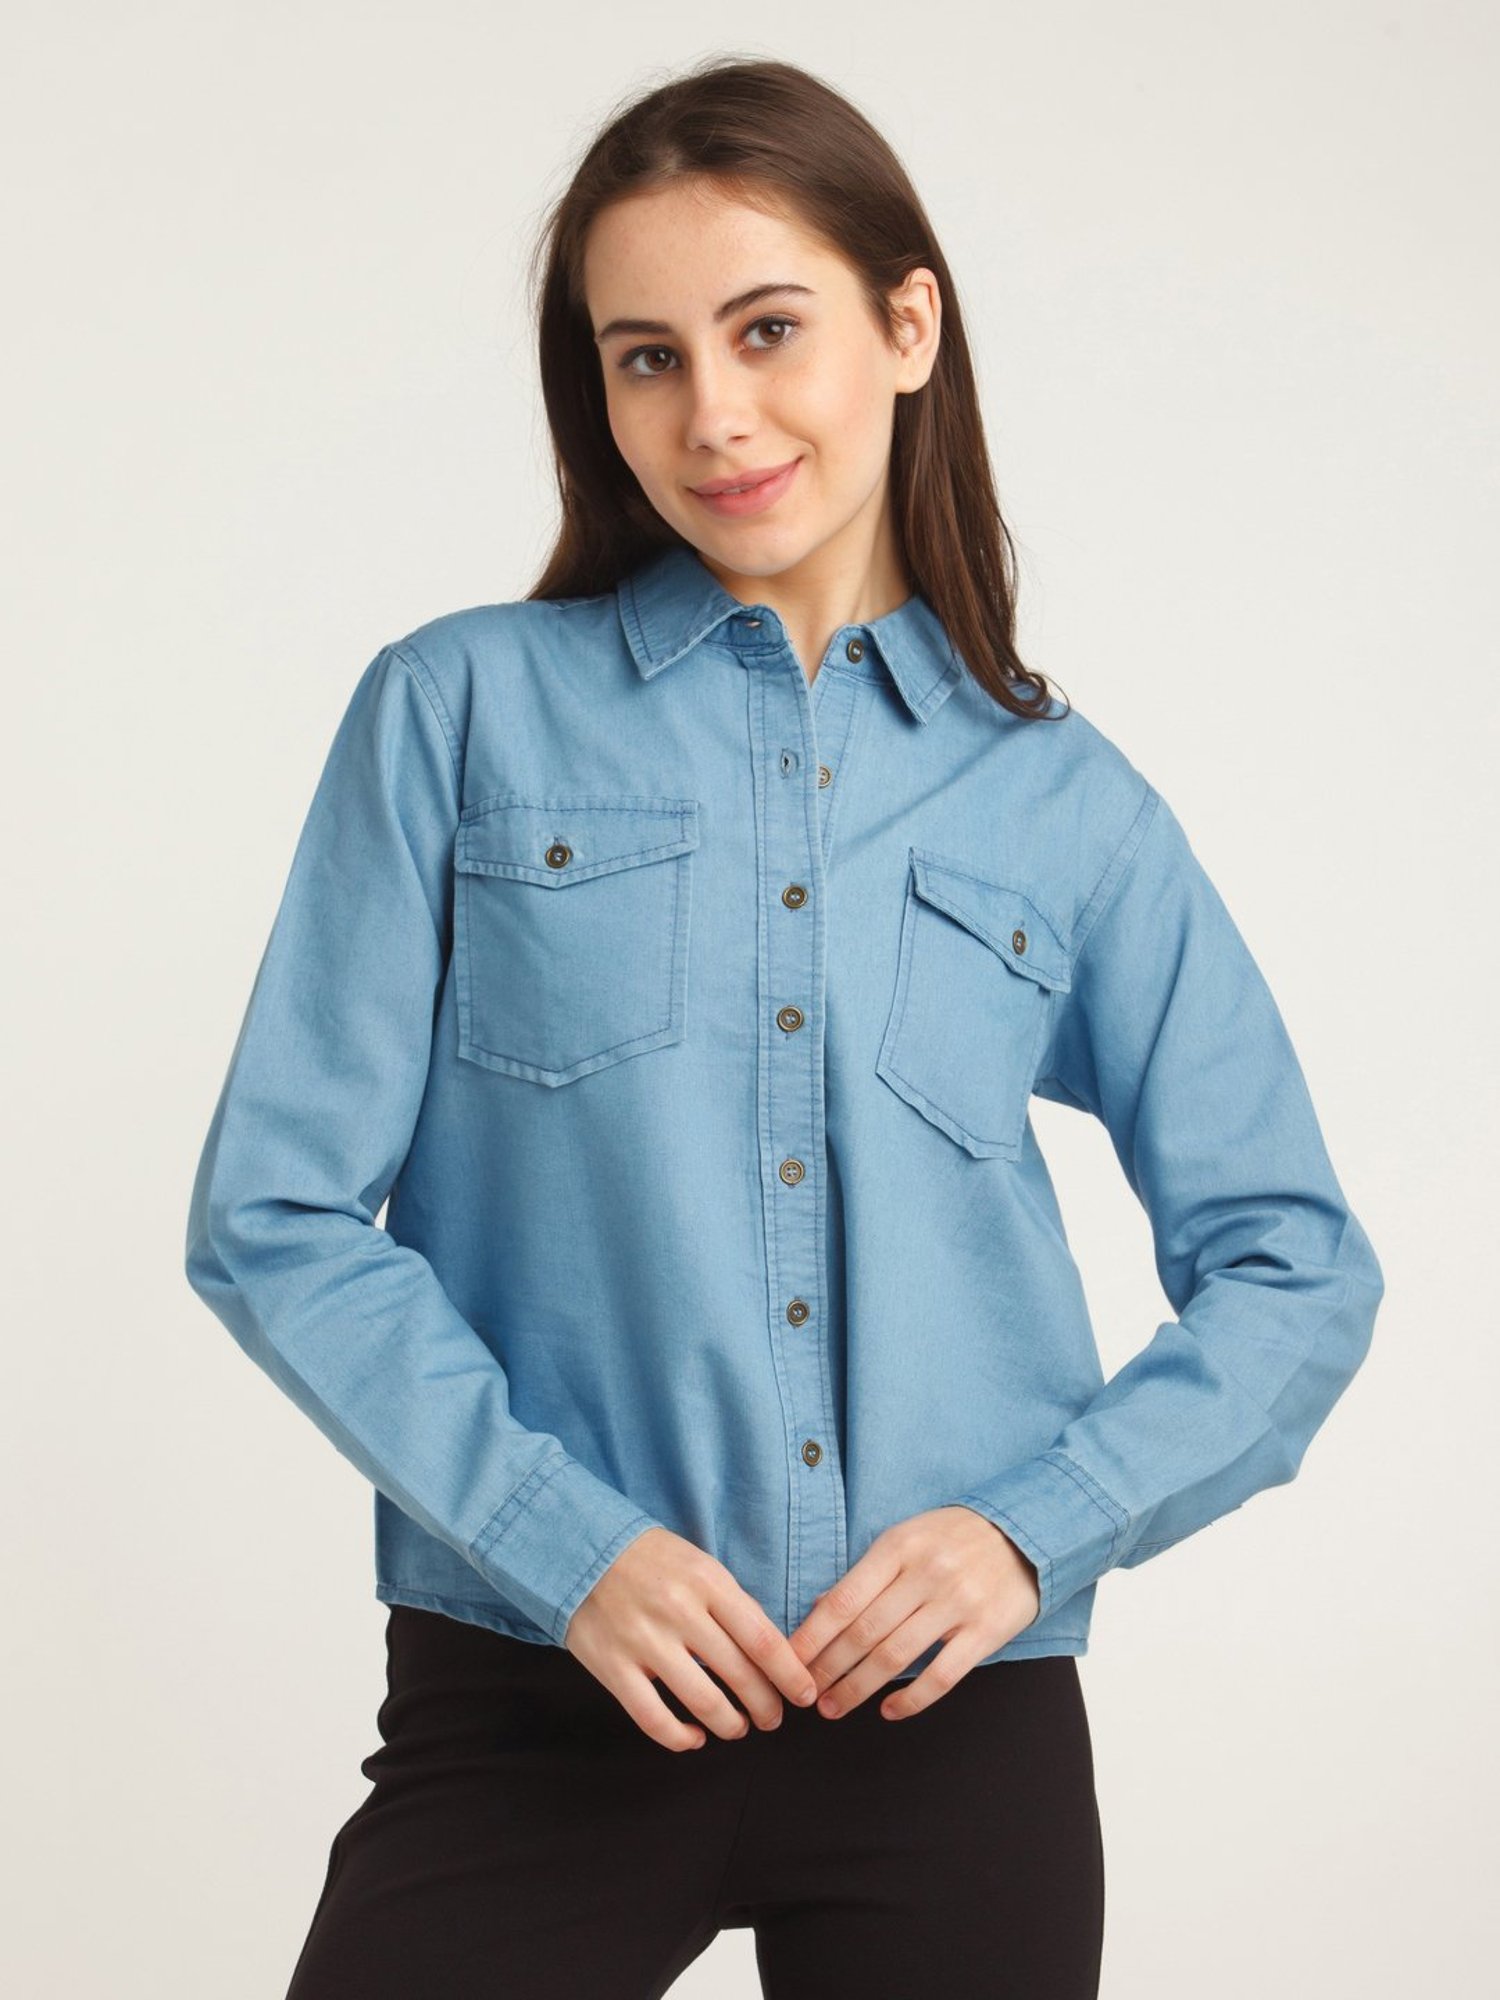 Womens Denim Shirt Dresses Summer Trendy Short Sleeve Jean Dress Button  Down Casual Short Tunic Dress with Pockets Small 03*blue